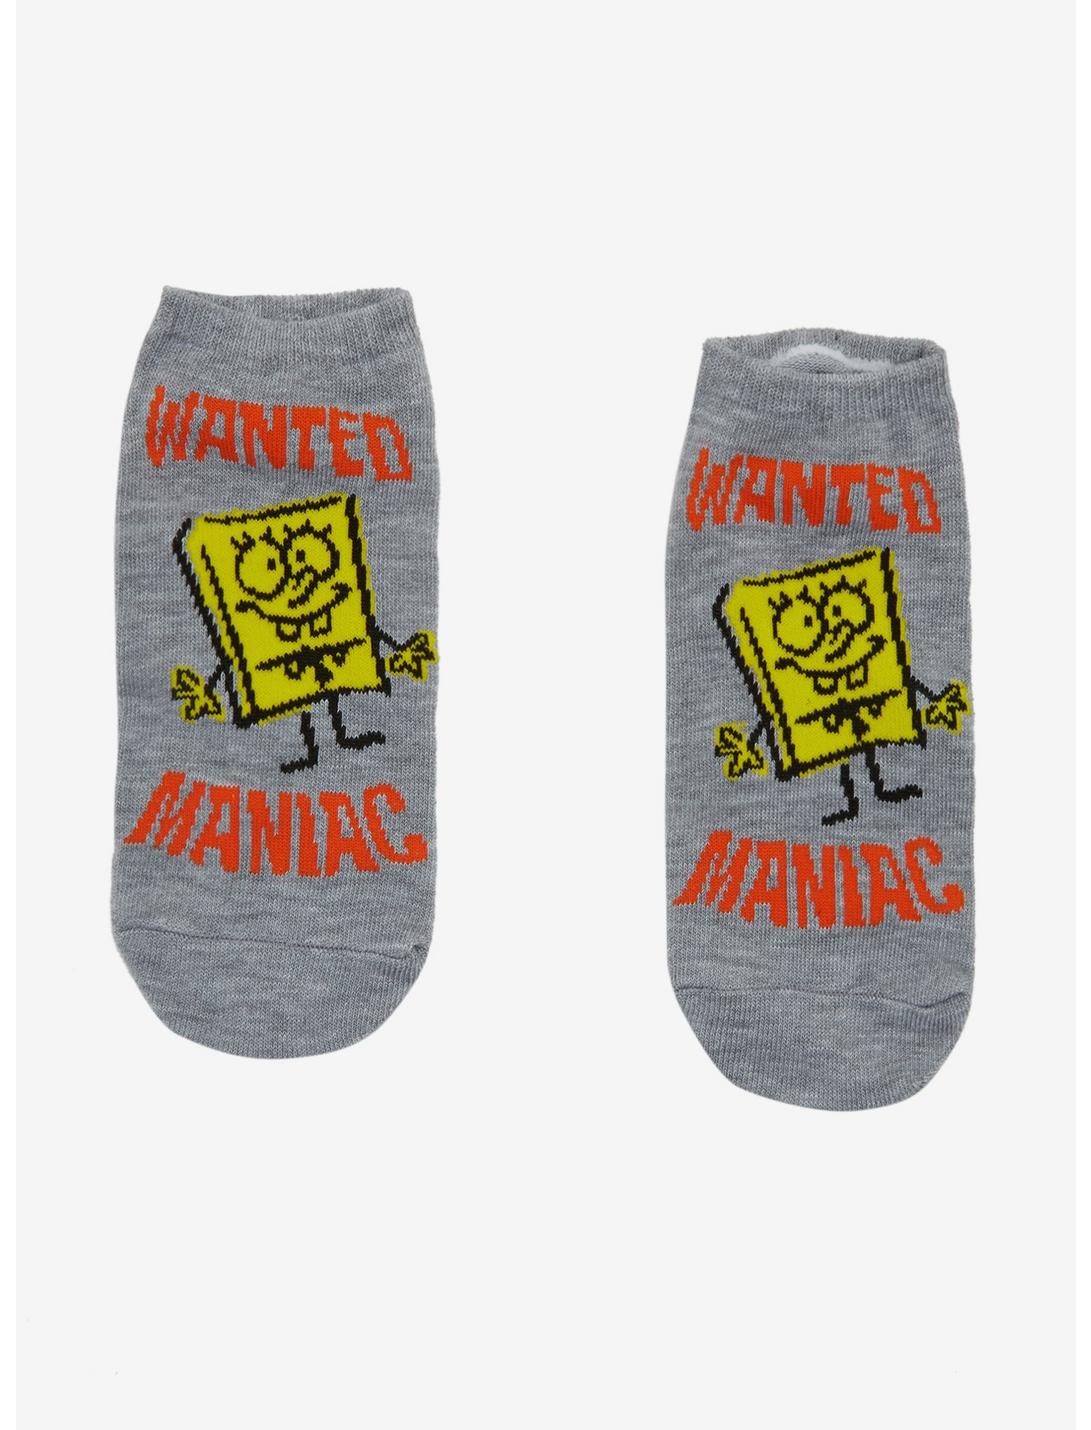 SpongeBob SquarePants Wanted Maniac No-Show Socks, , hi-res